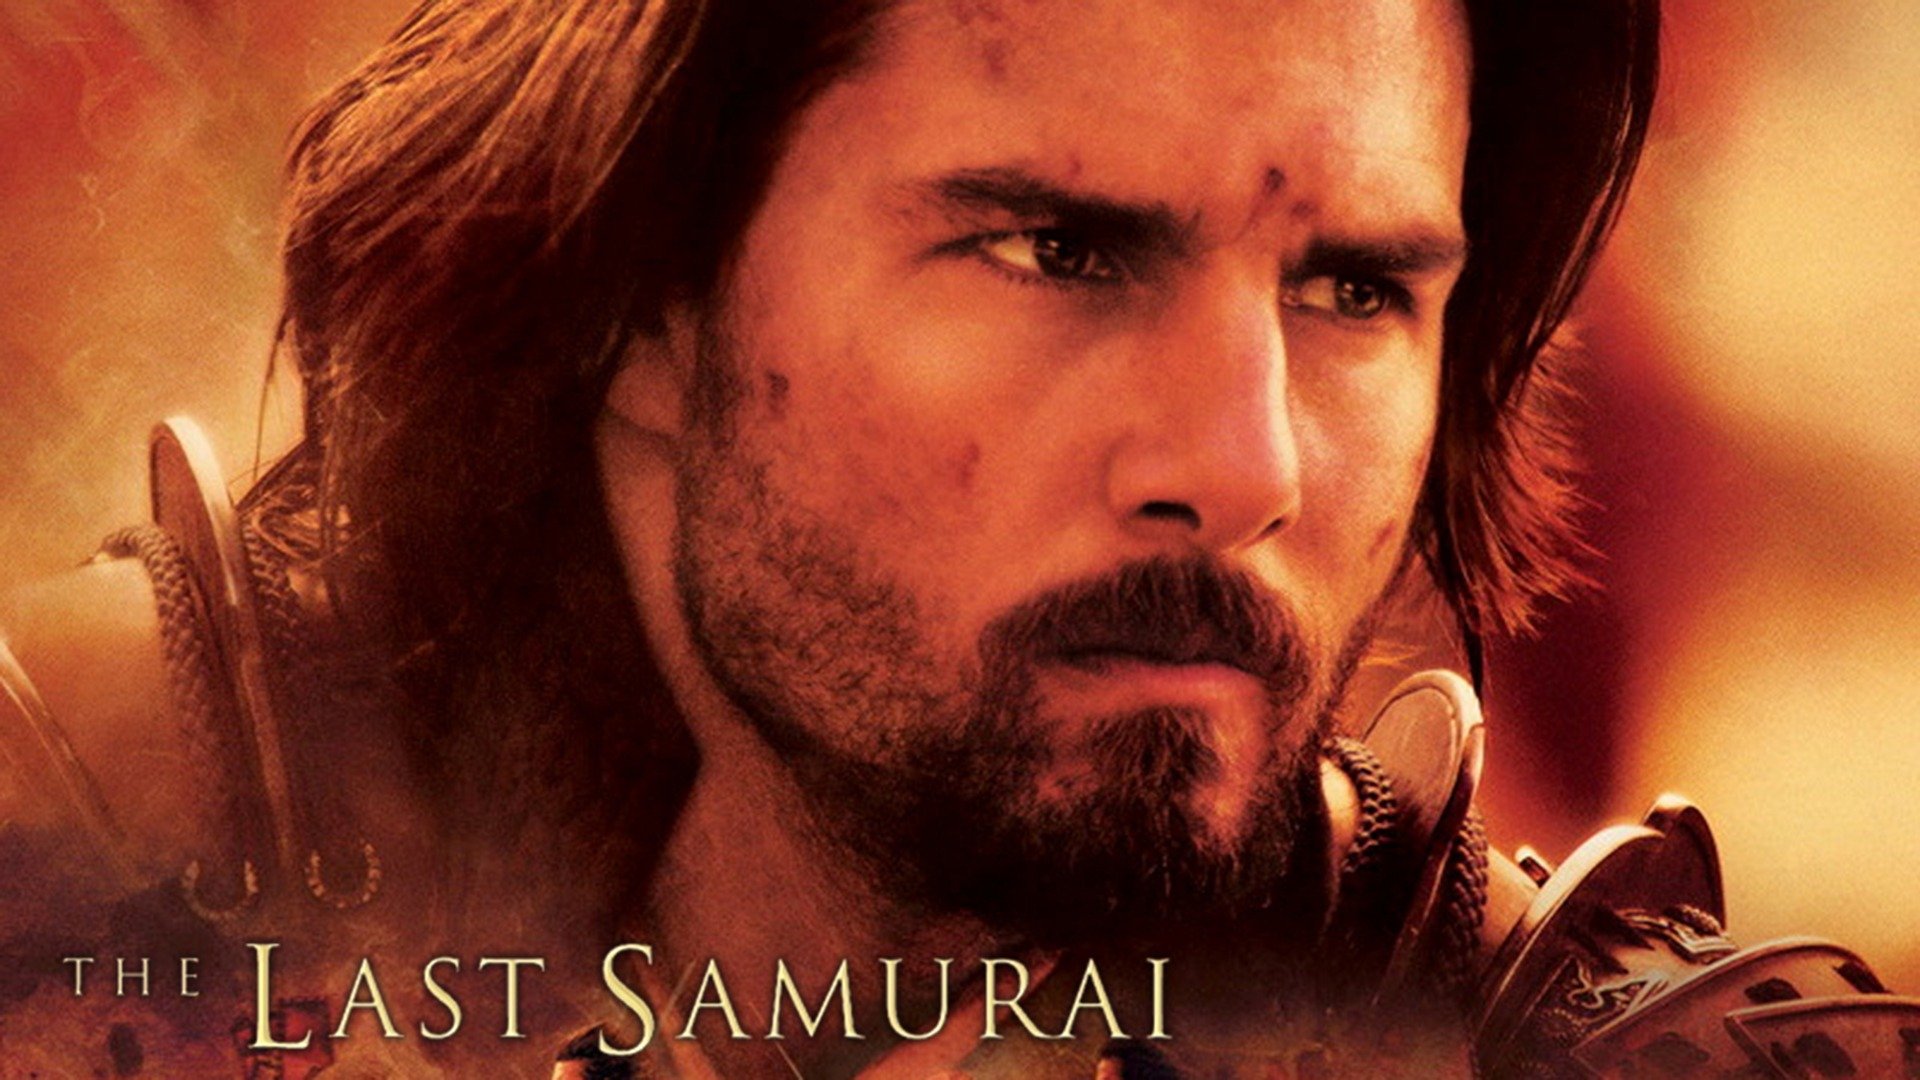 The Last Samurai (2003) - Movie - Where To Watch